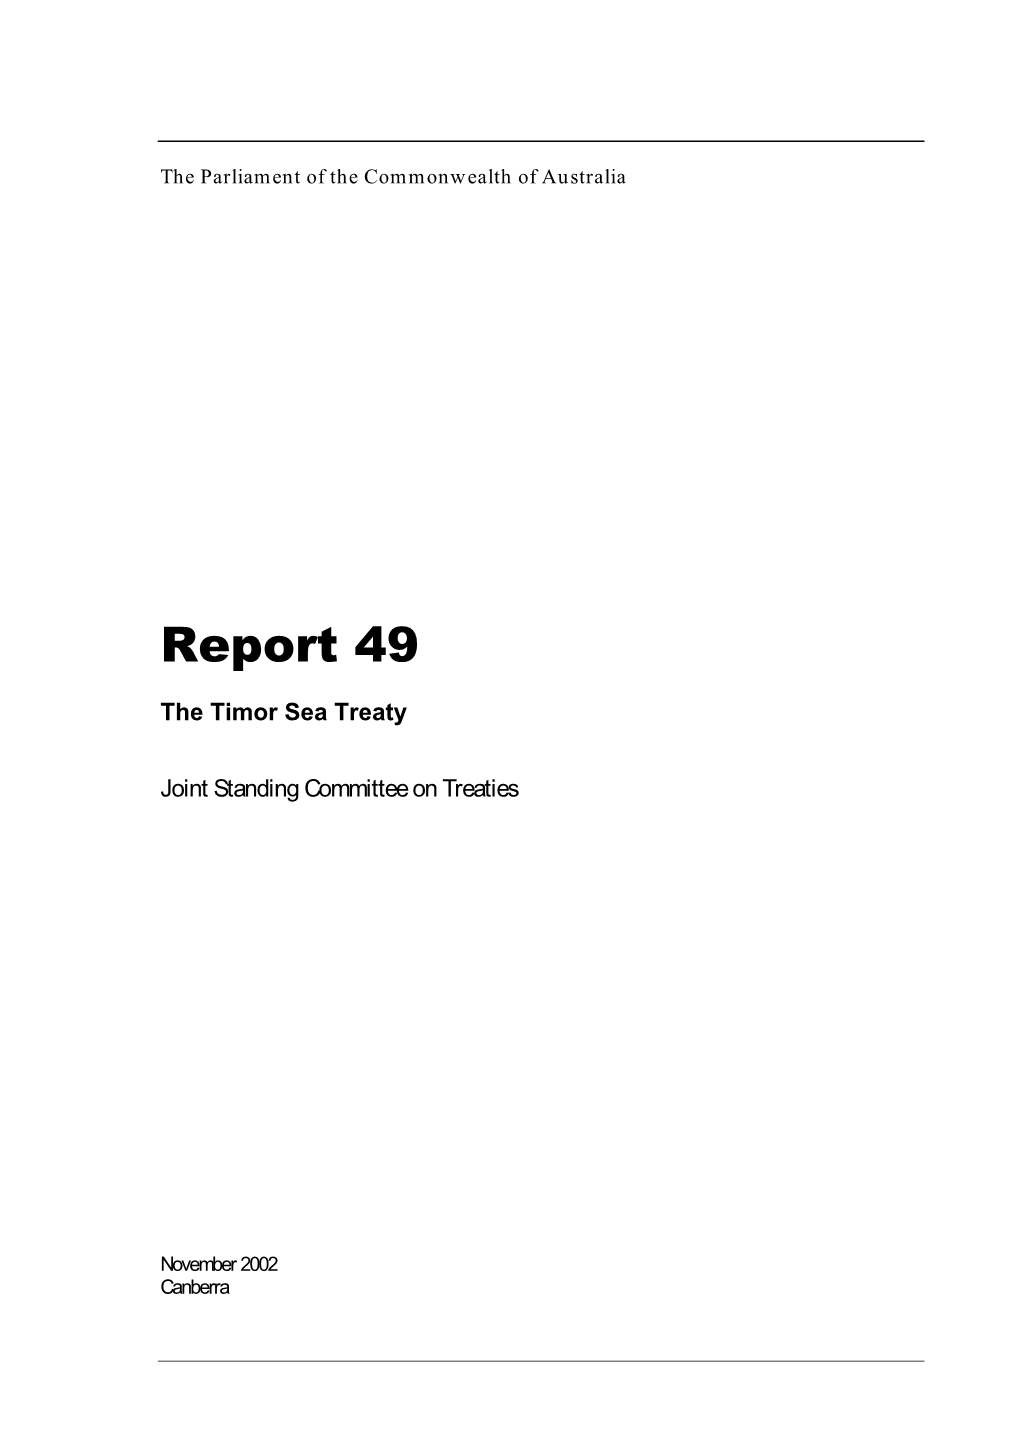 Report 49: the Timor Sea Treaty